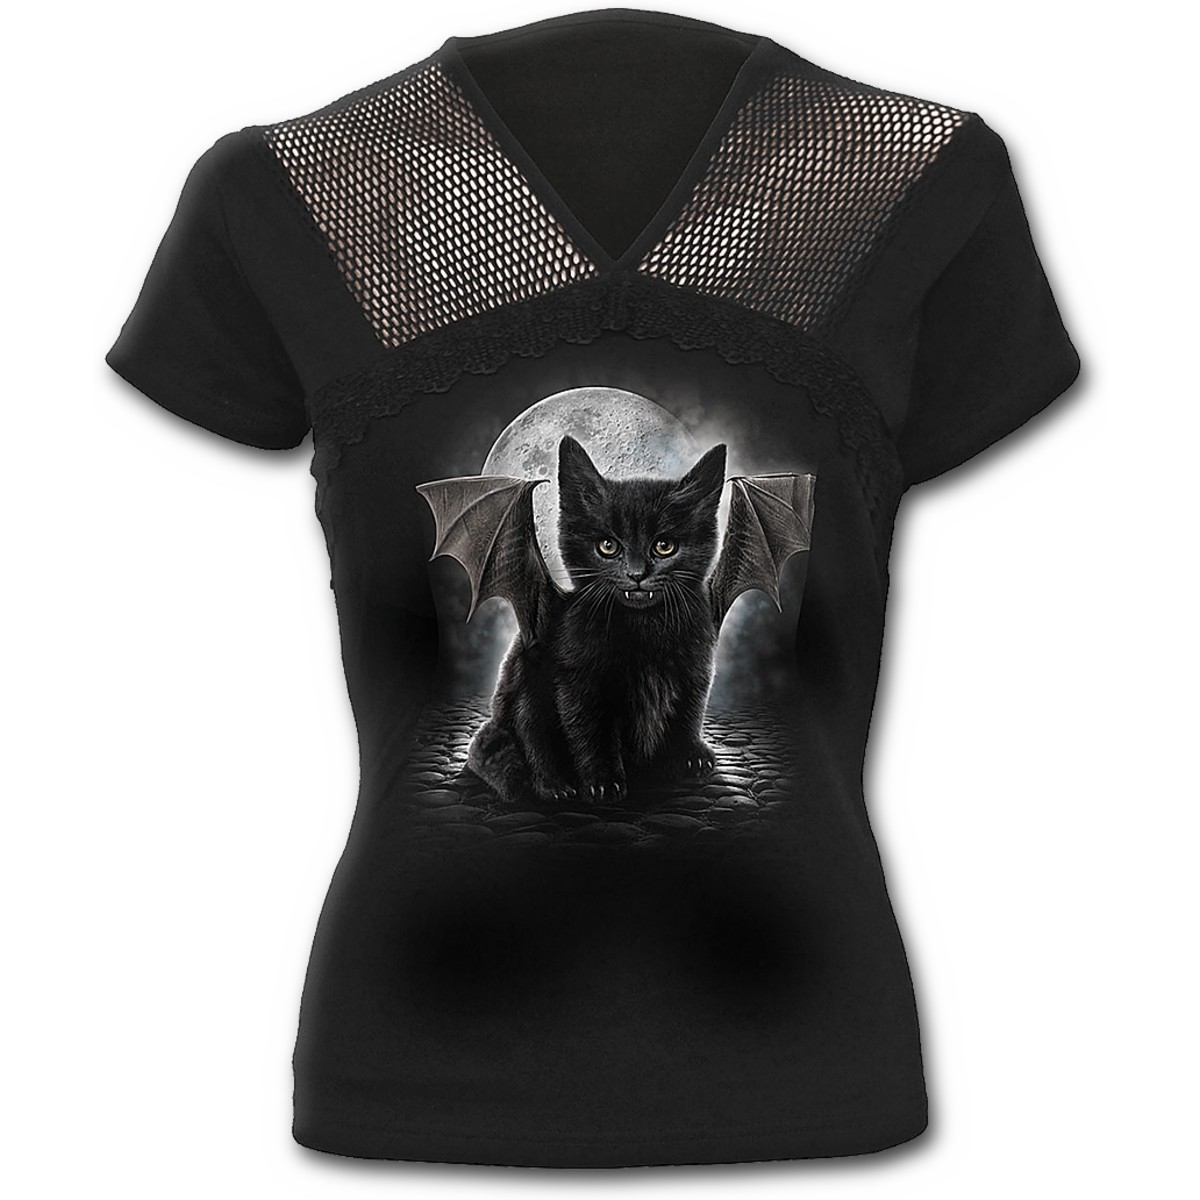 Bat Cat Mesh Top T-Shirt